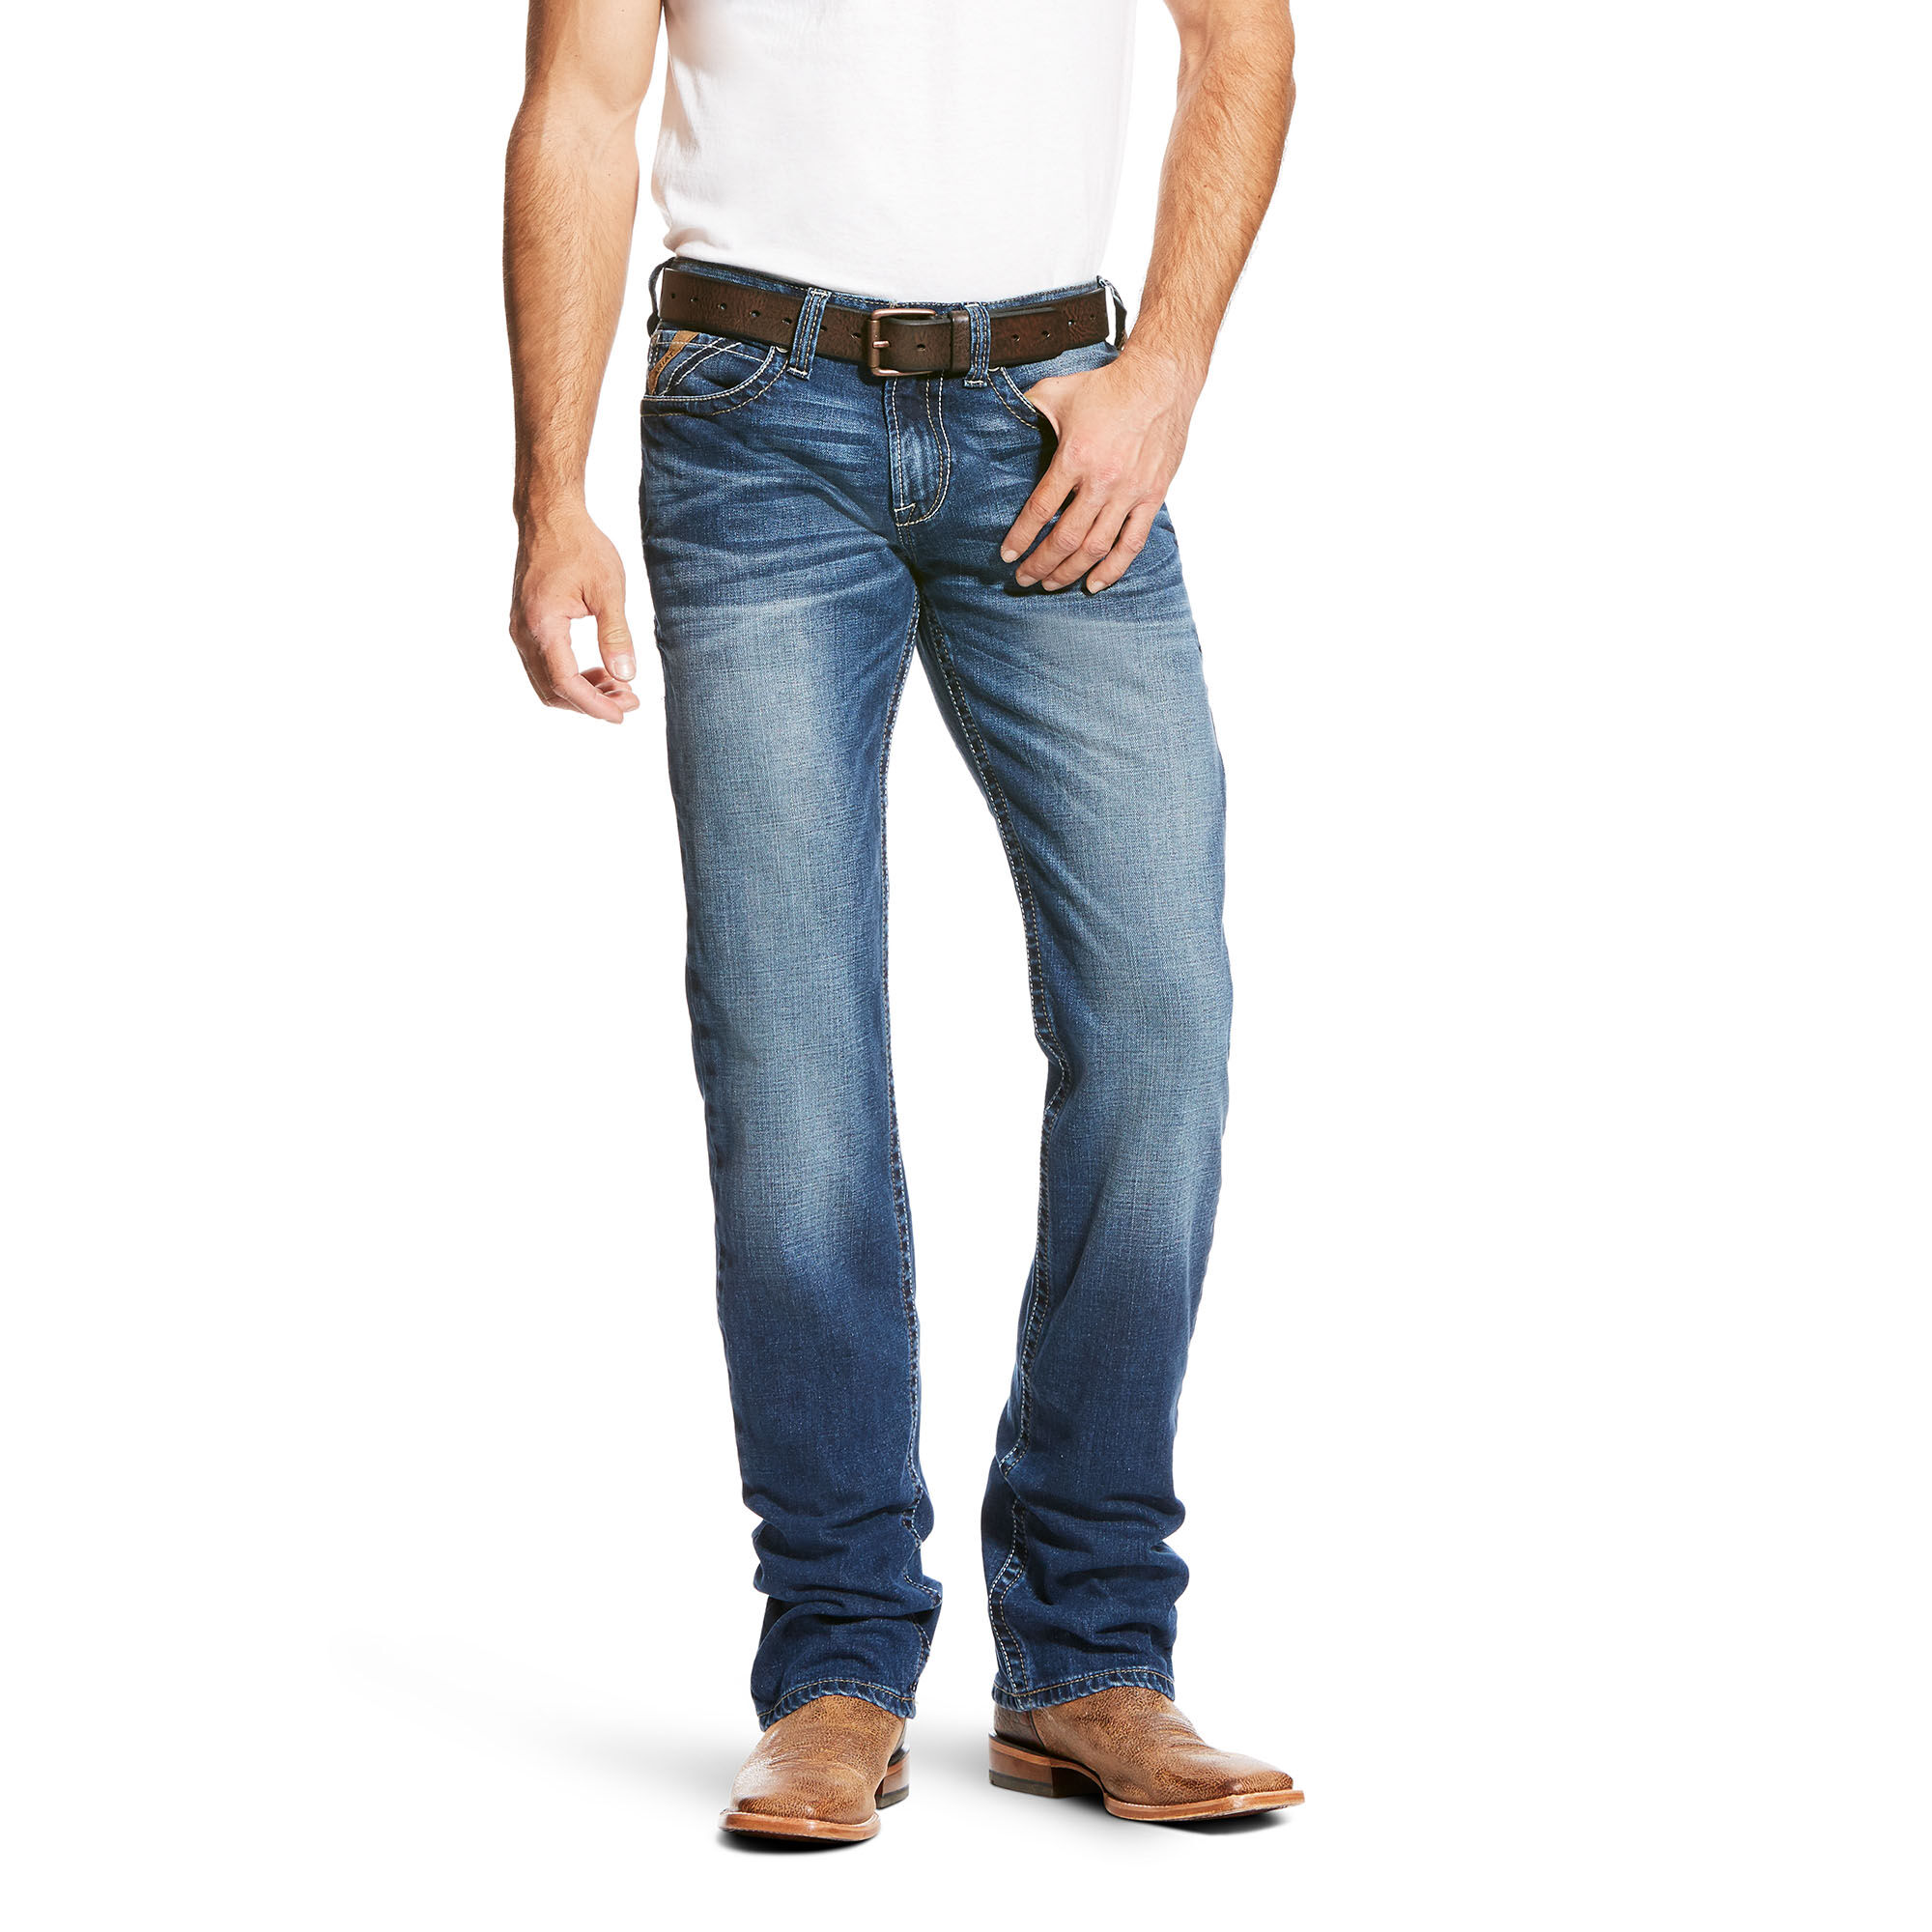 concord jeans price